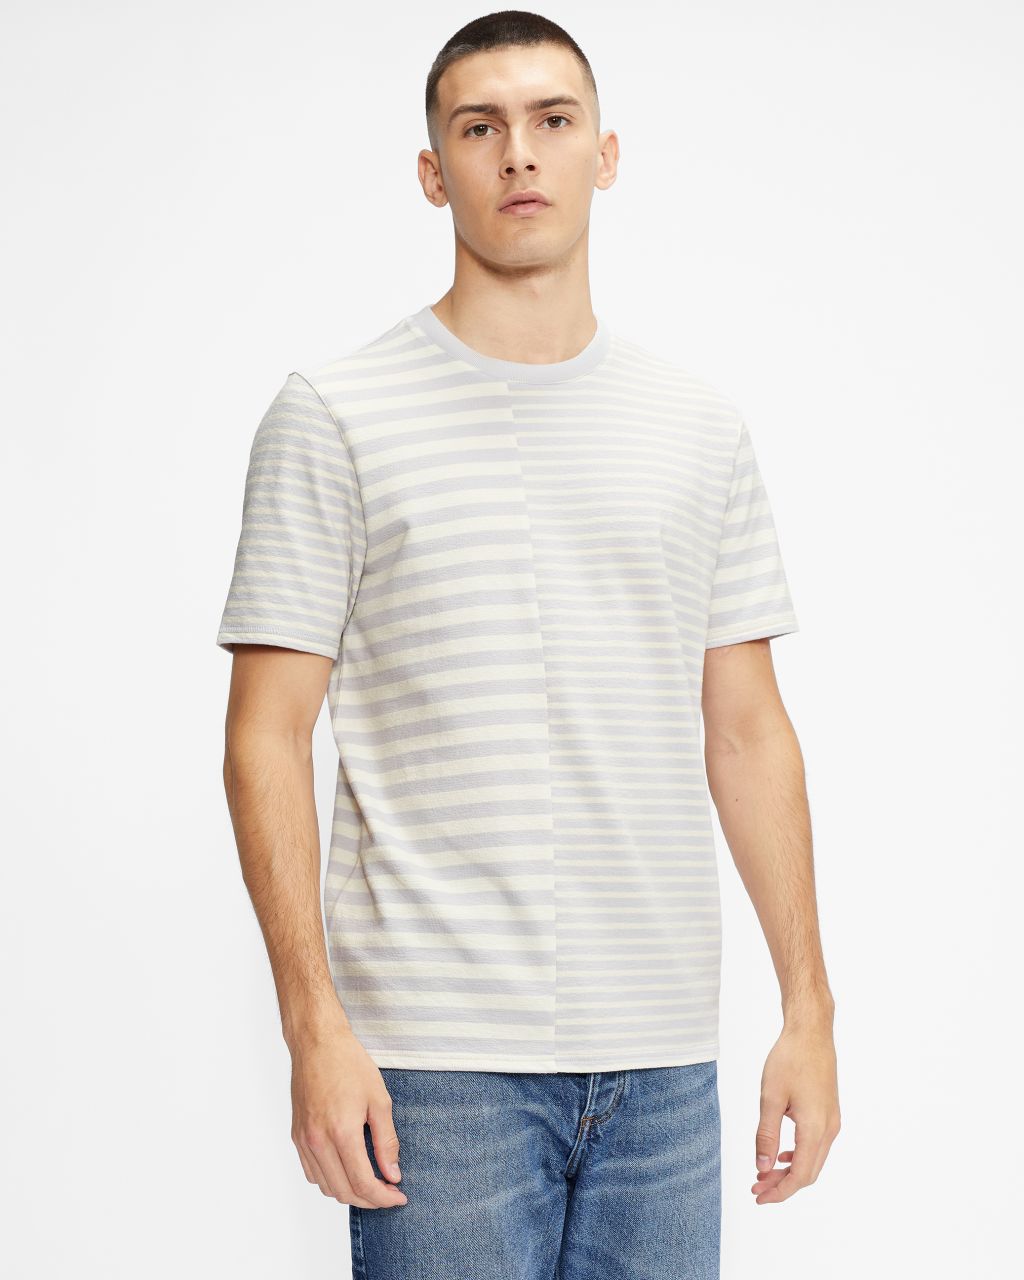 Mixed Stripe T Shirt